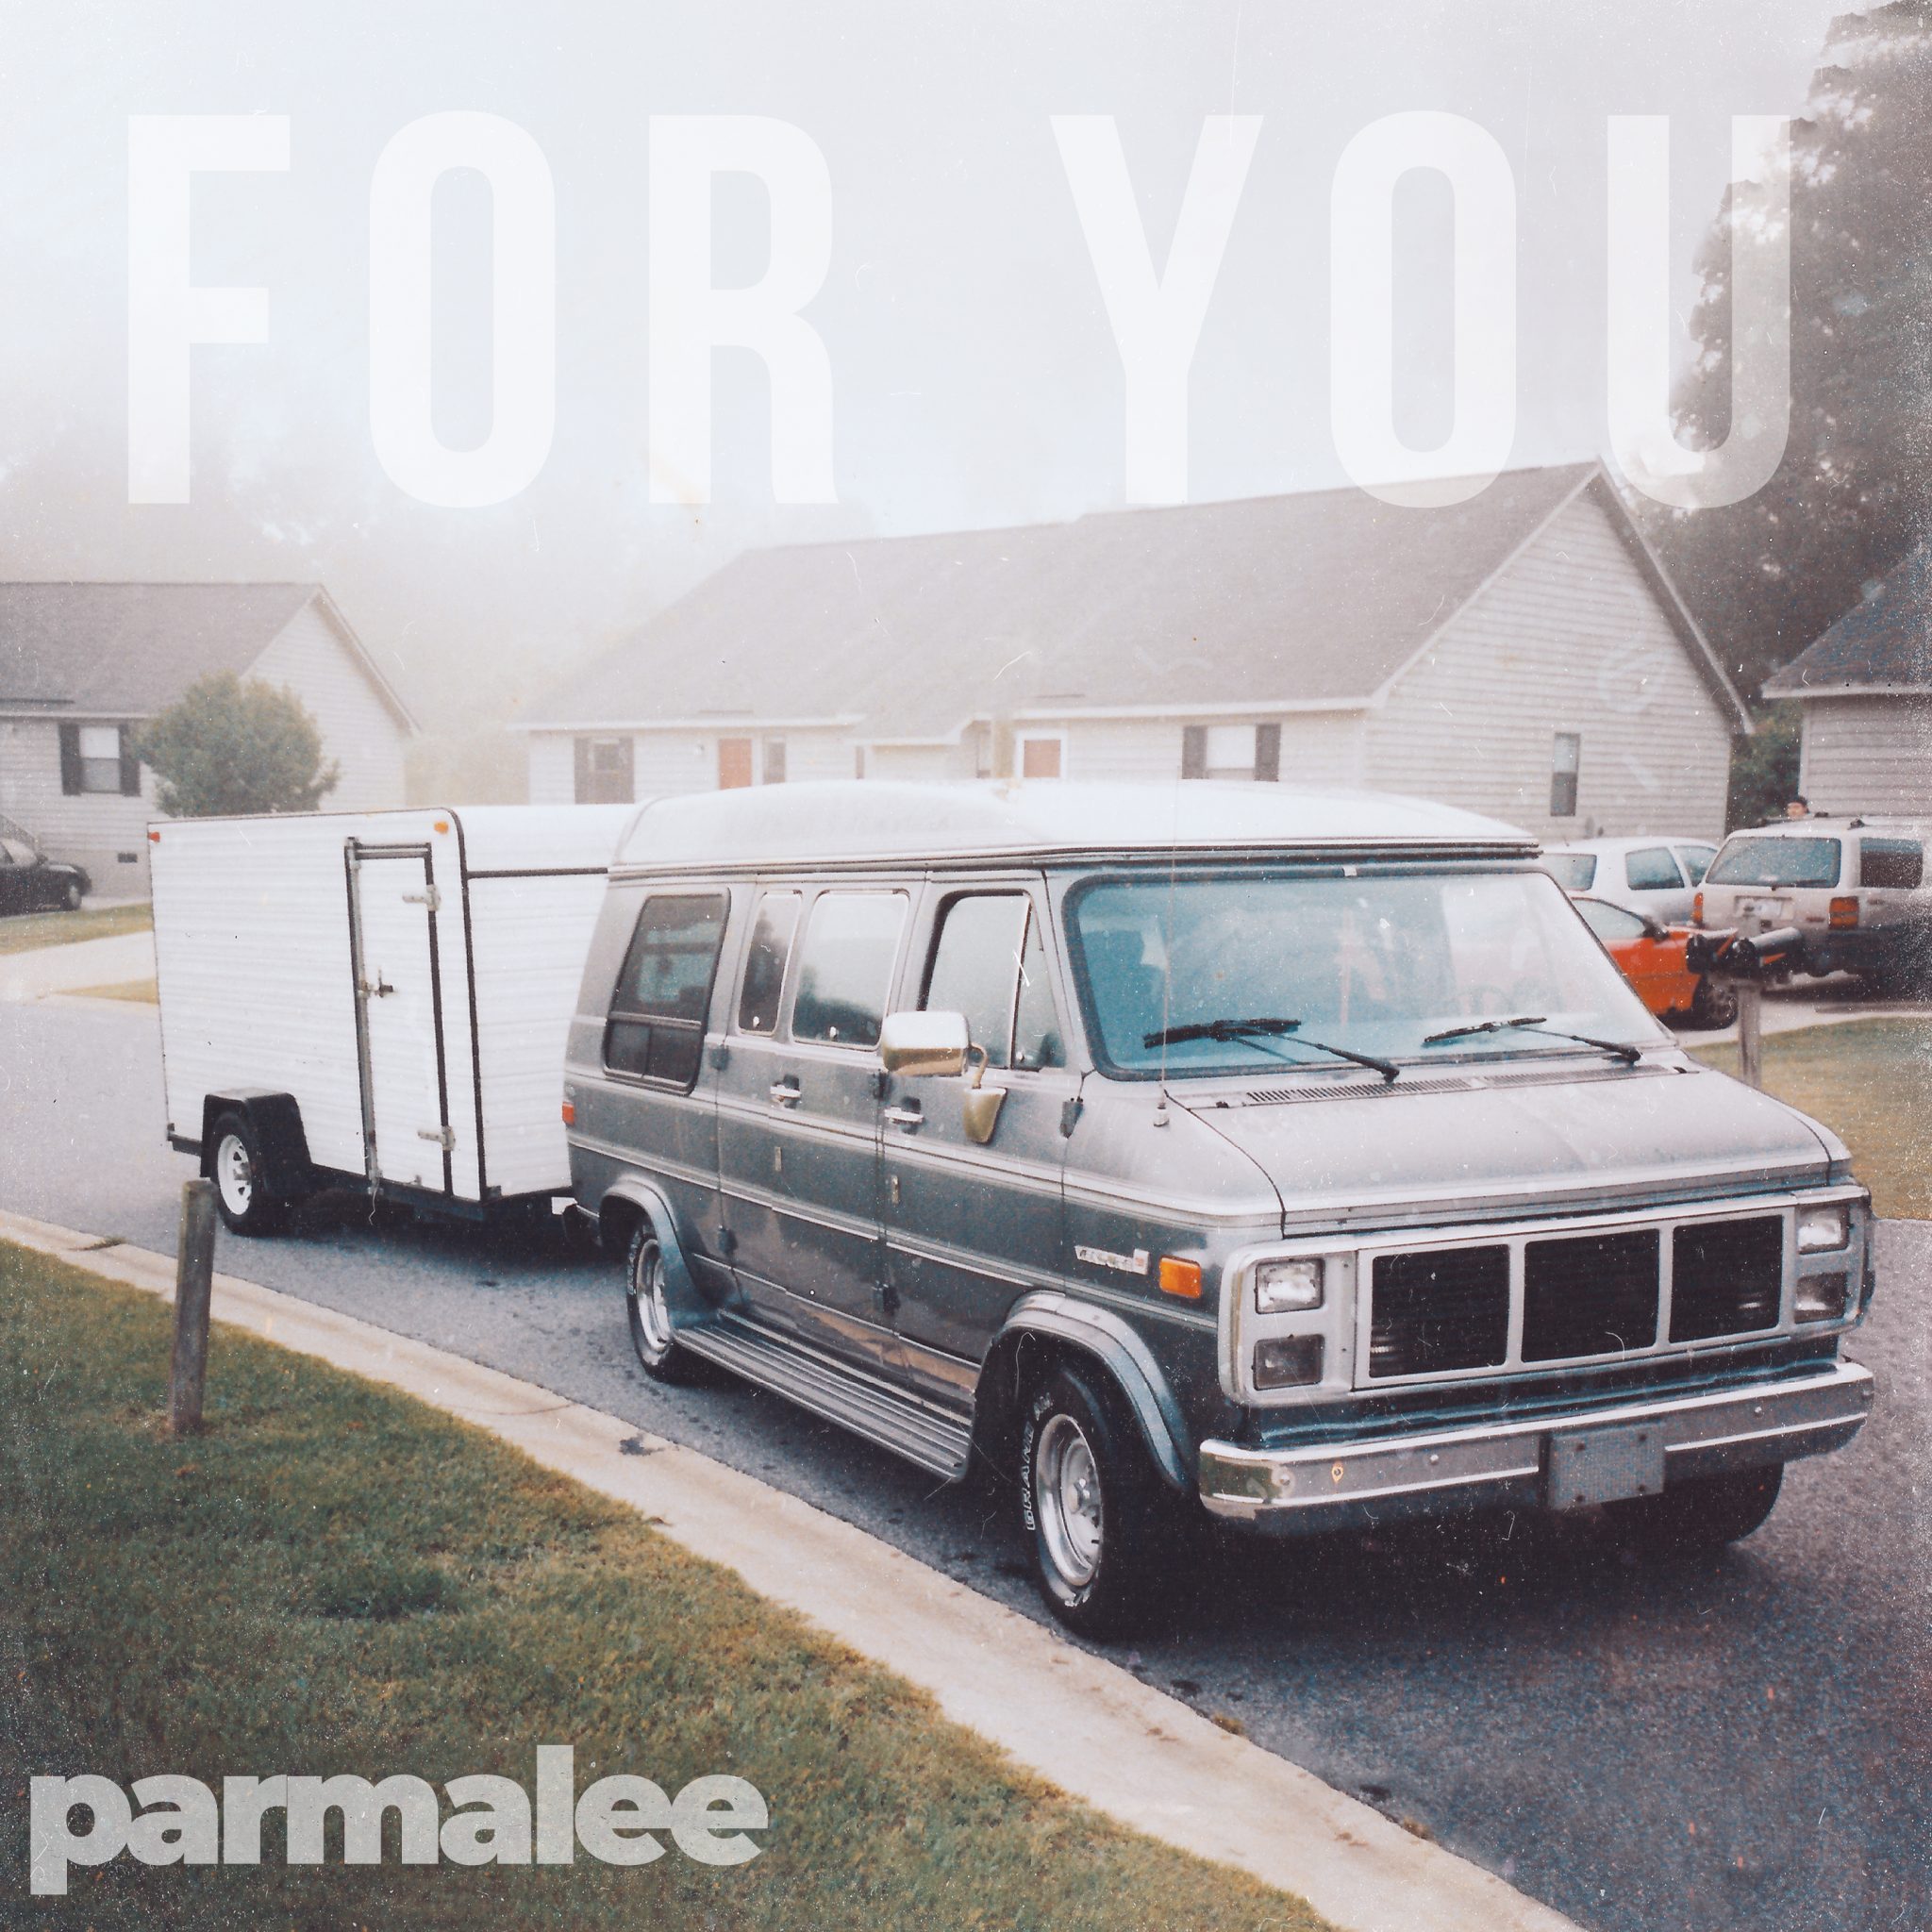 Parmalee Announces New Contemporary Album, 'For You' Sounds Like Nashville